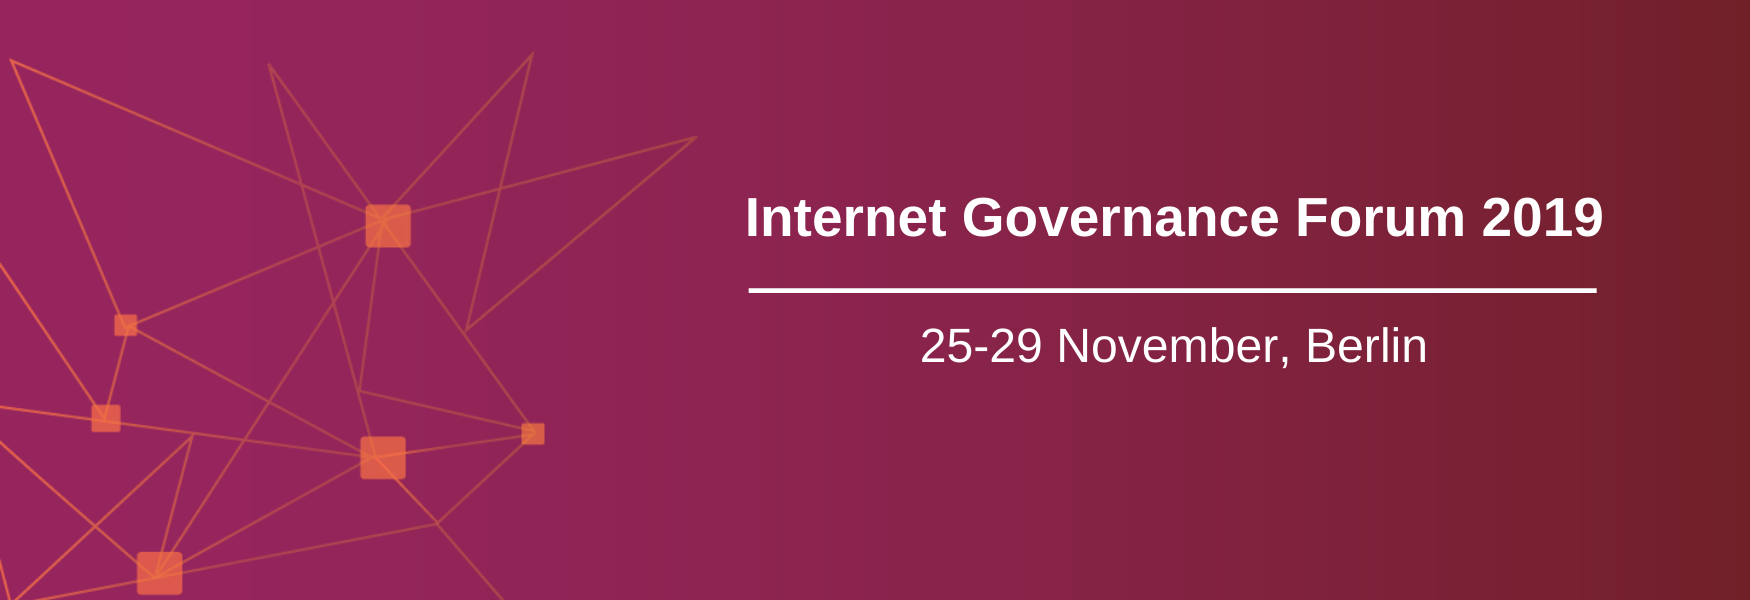 Internet Governance Forum 2019